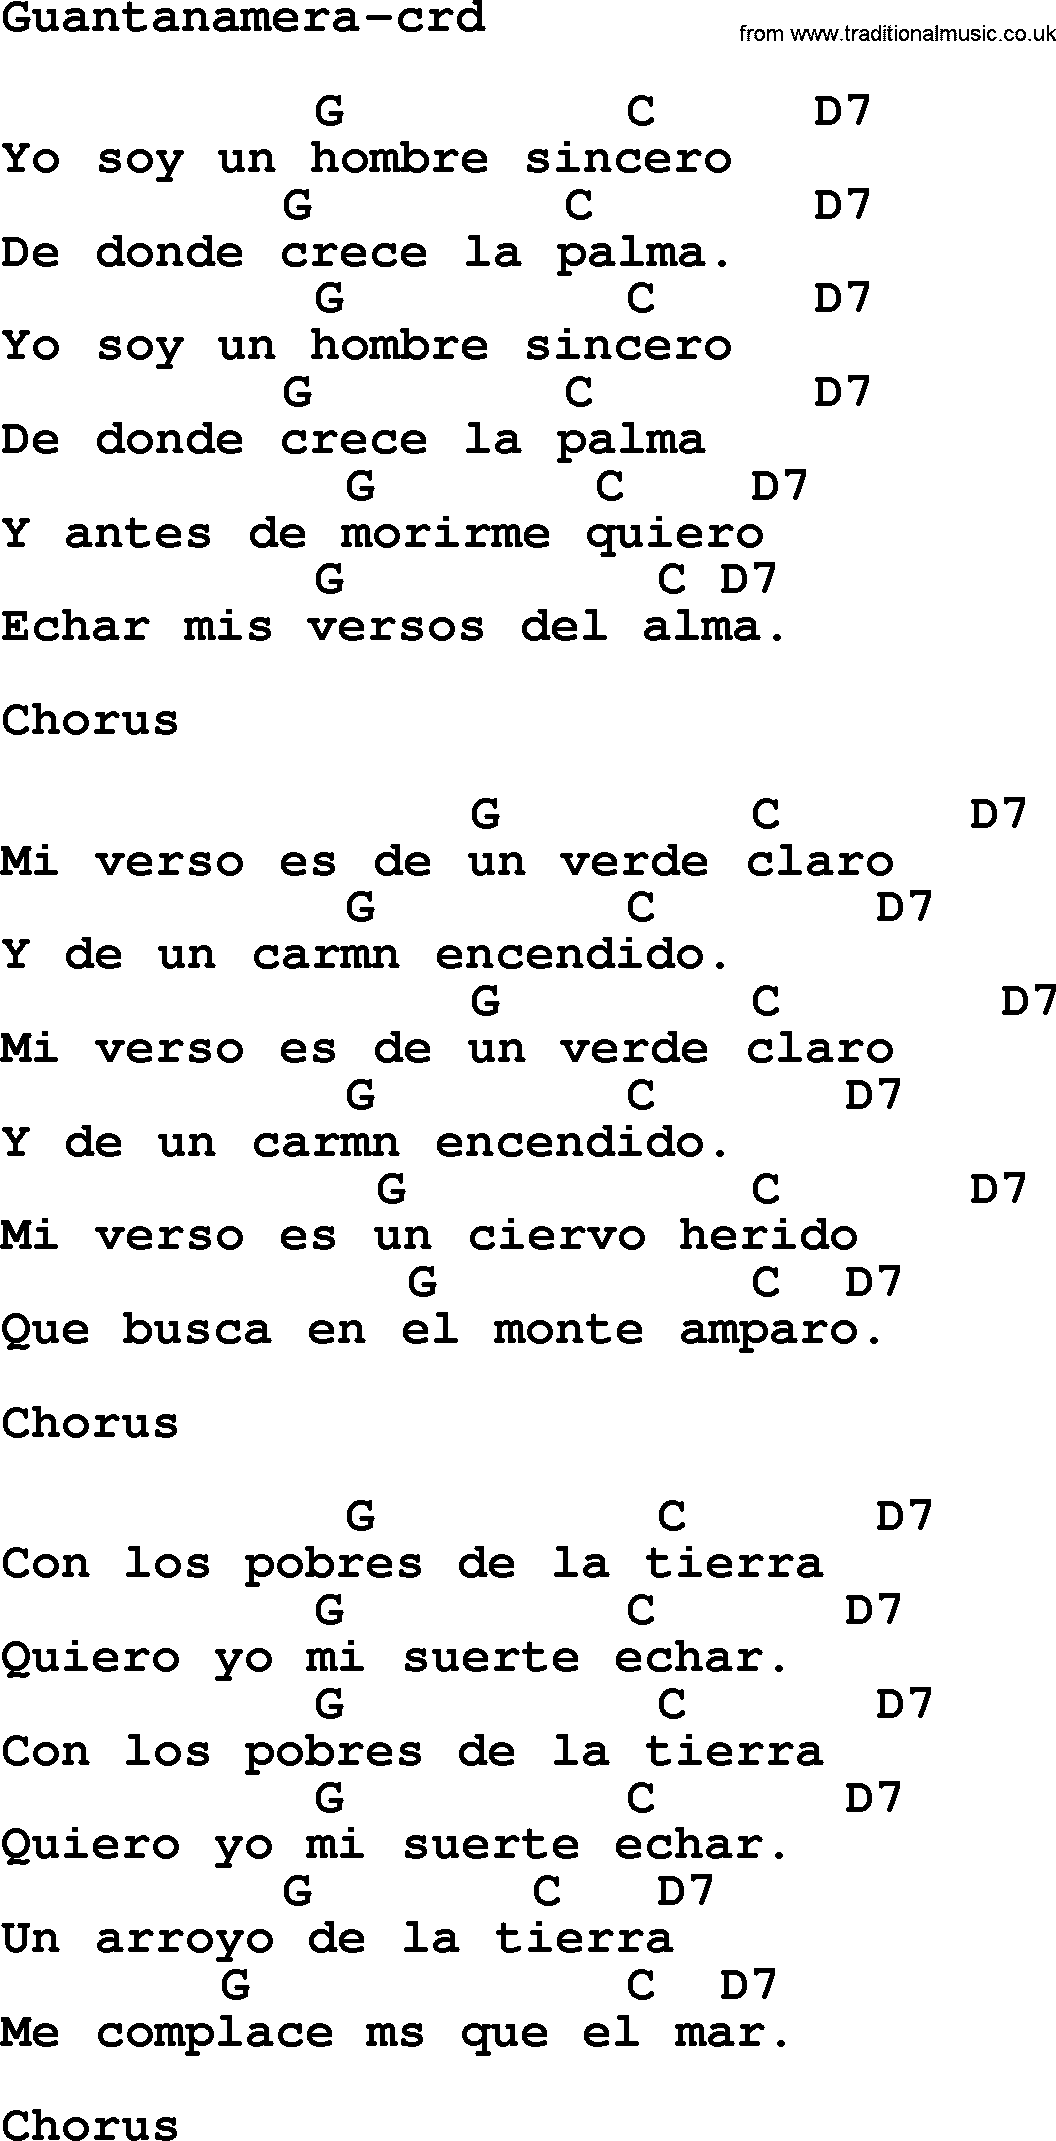 Joan Baez song Guantanamera lyrics and chords